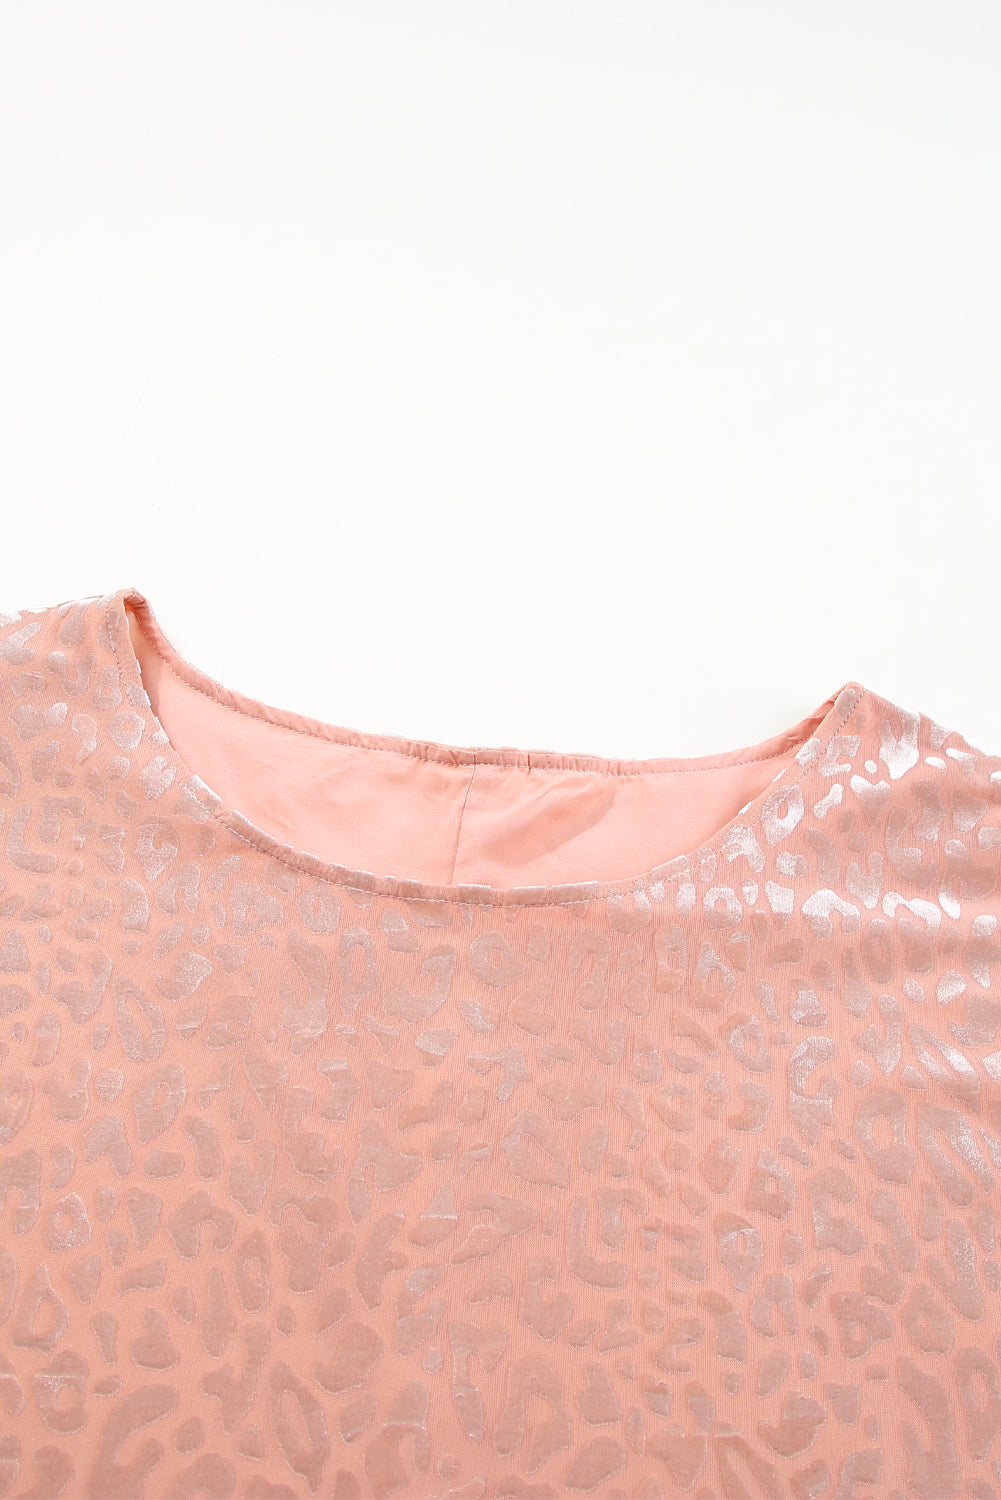 T-shirt leopardata glitterata rosa taglie forti